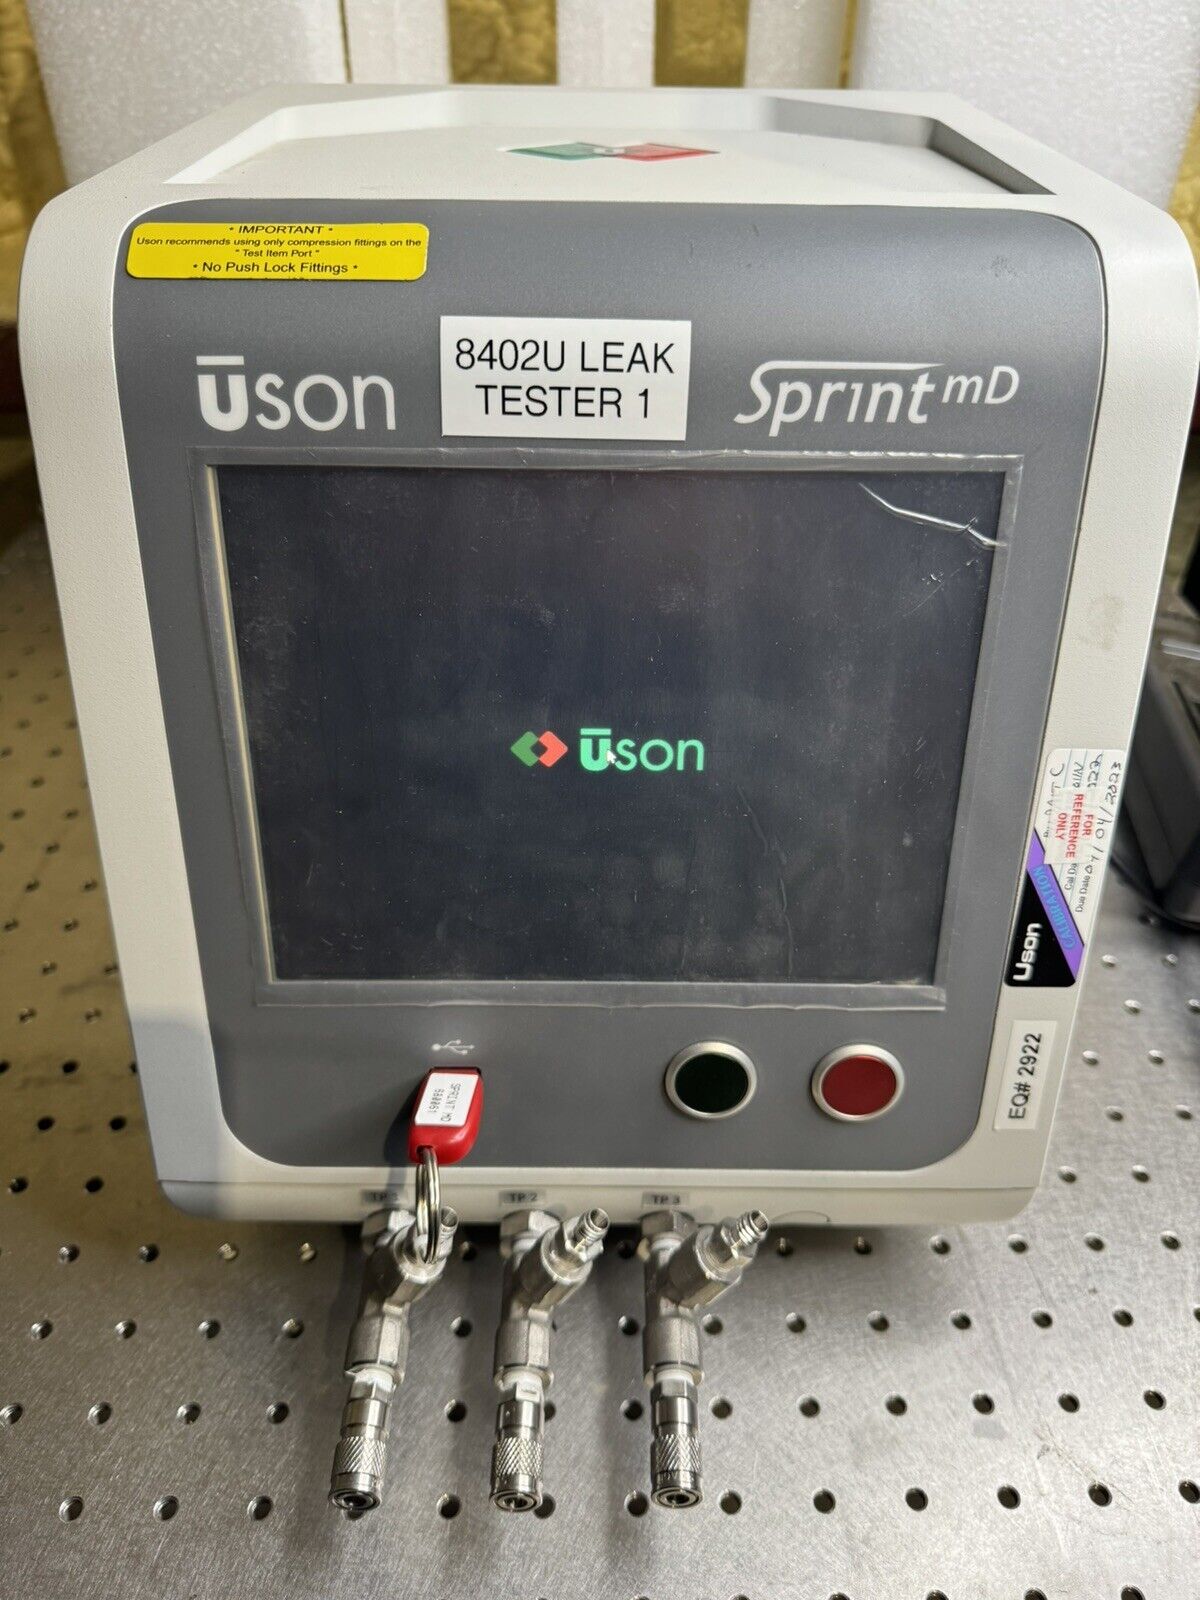 Uson Leak Tester / Uson Sprint MD